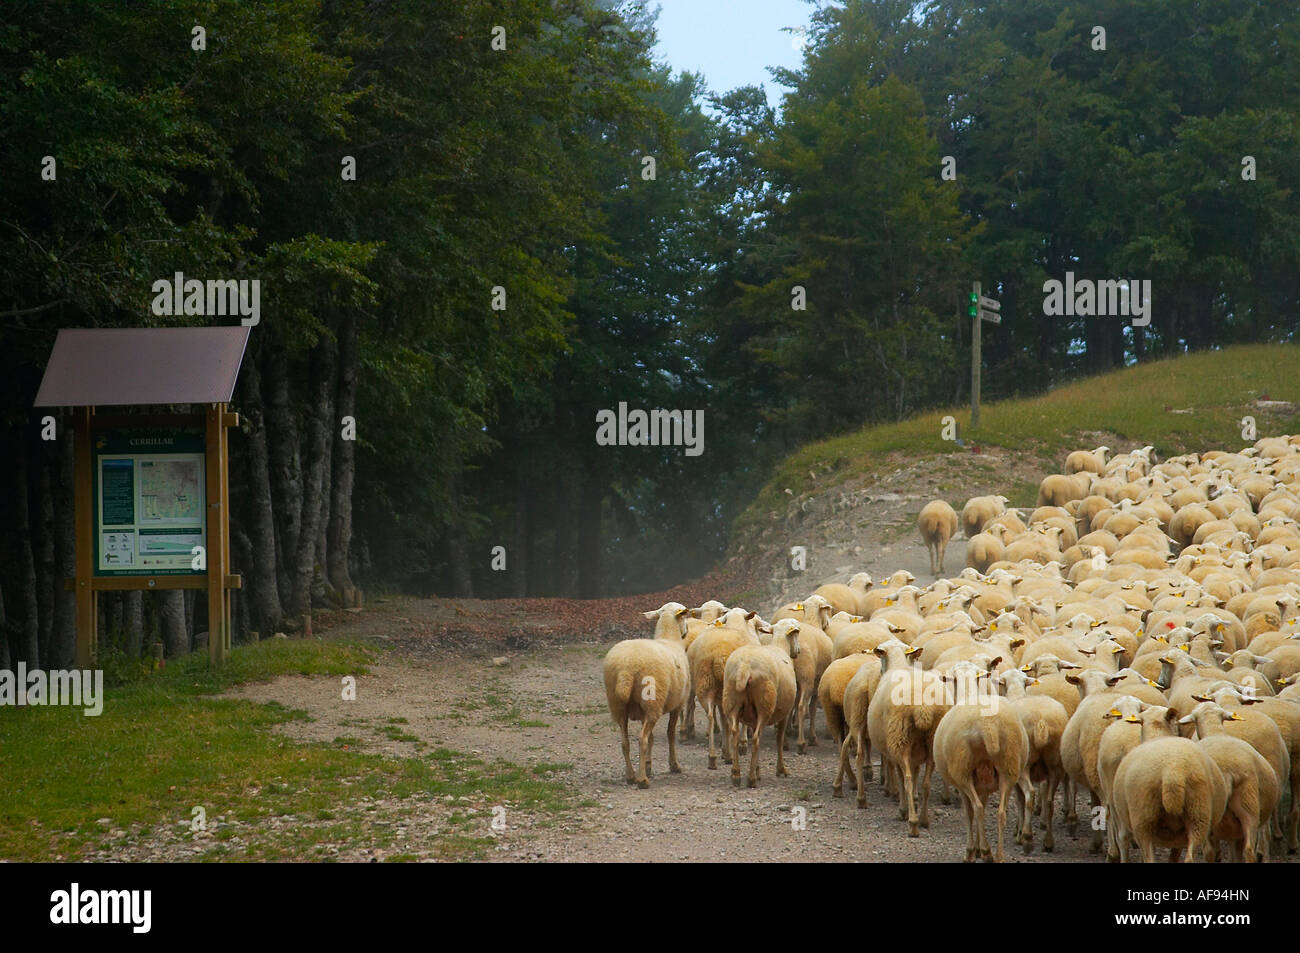 Rebaño de ovejas, Selva de Irati, Navarra, España. Sheep herd, Iraty Forest, Navarre, Spain. Stock Photo